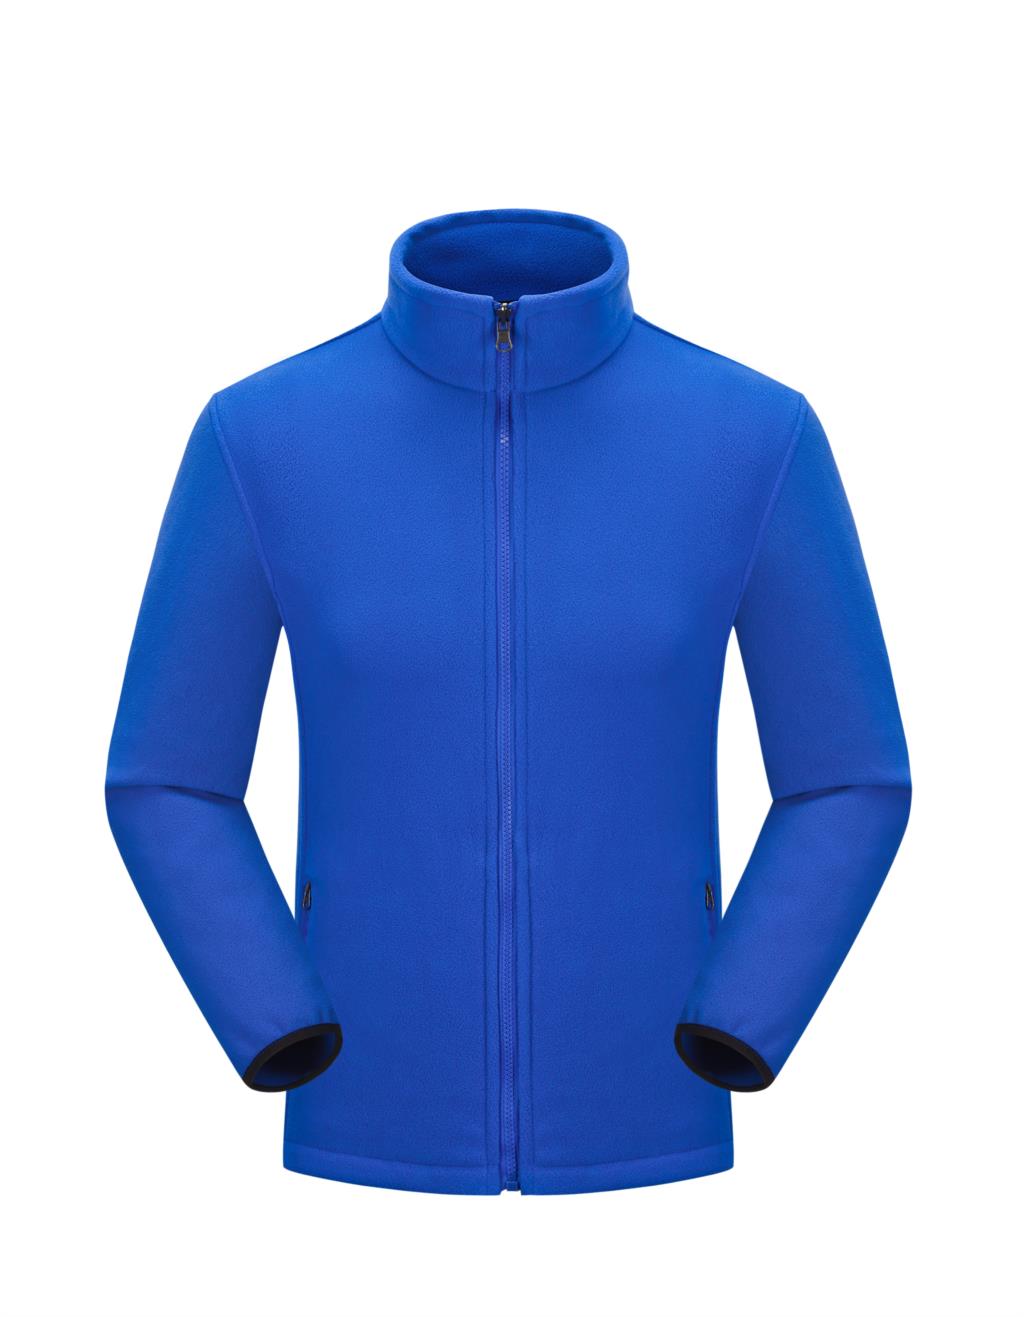 Comprar royal-blue Women long sleeve Zip up Fleece Sweatshirts for Running